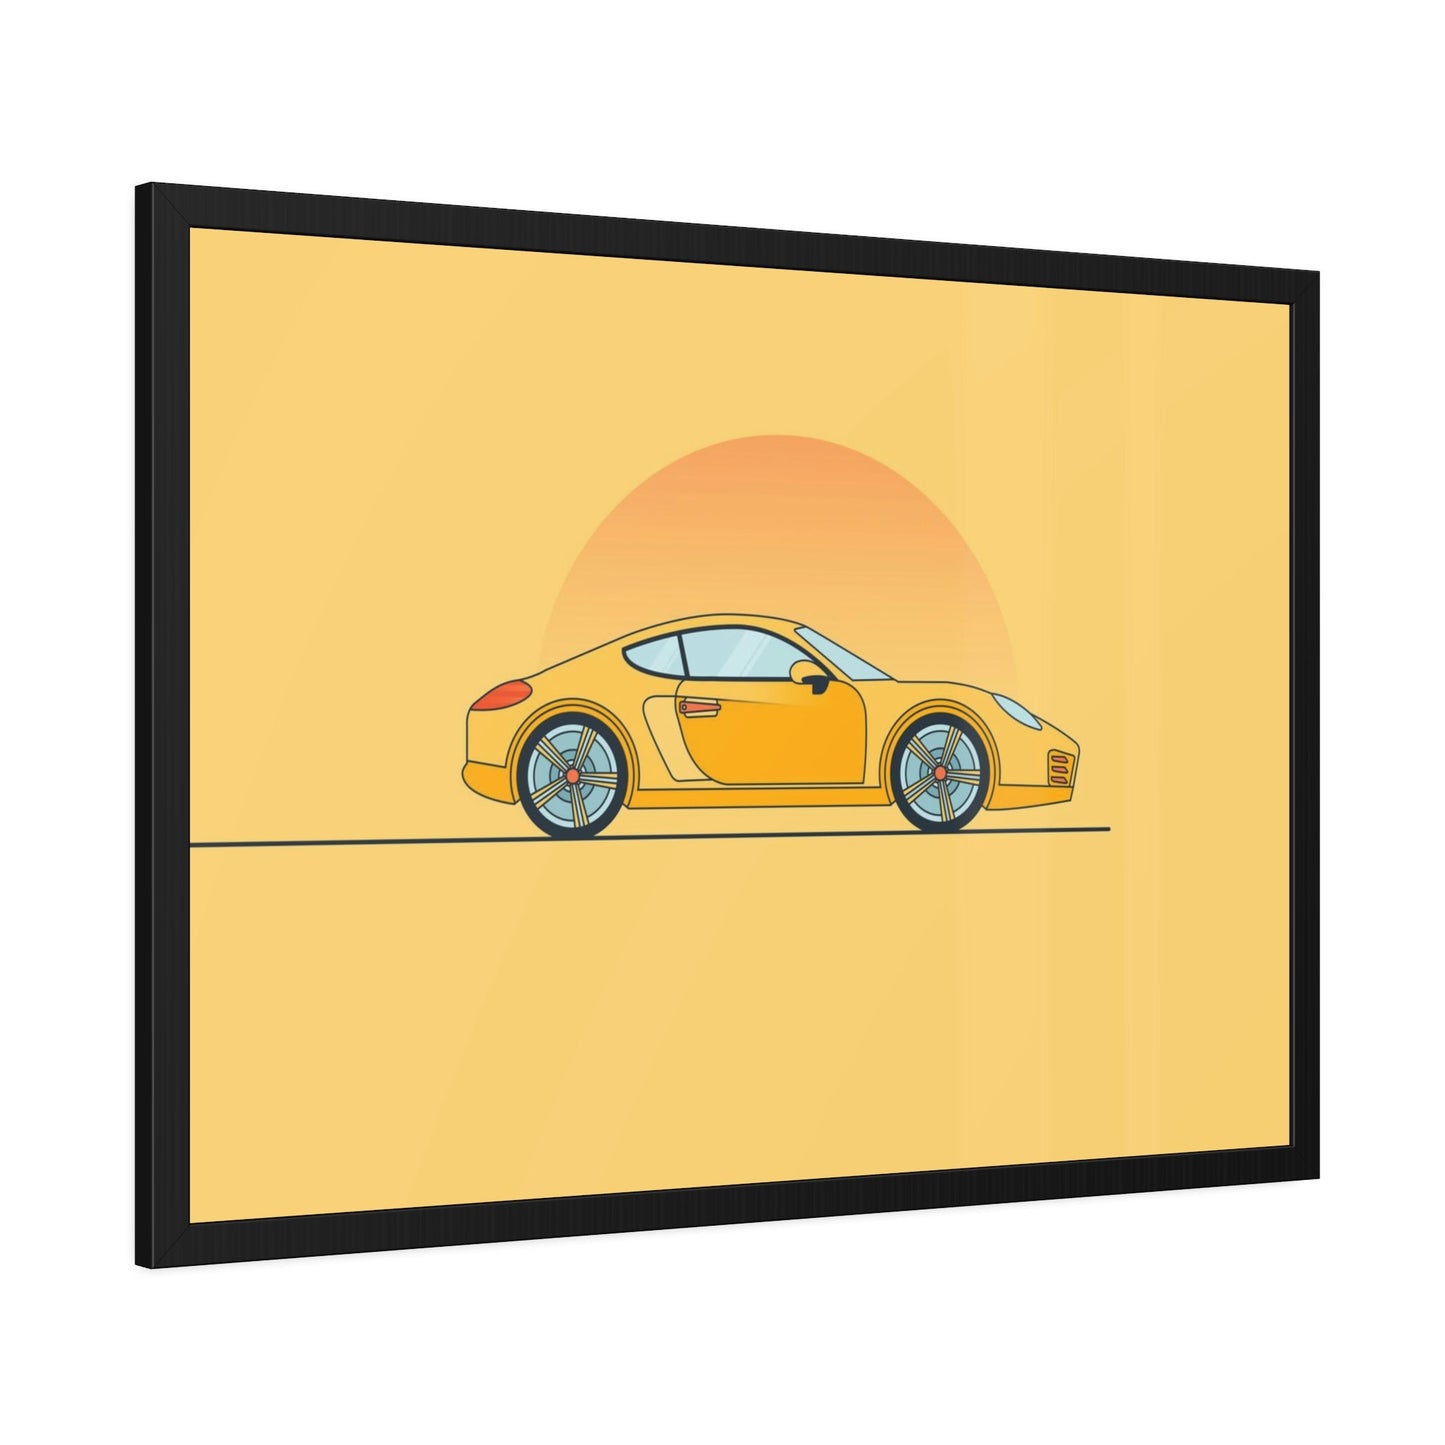 Racing Heritage: Framed Canvas & Poster Art Featuring Porsche Legends